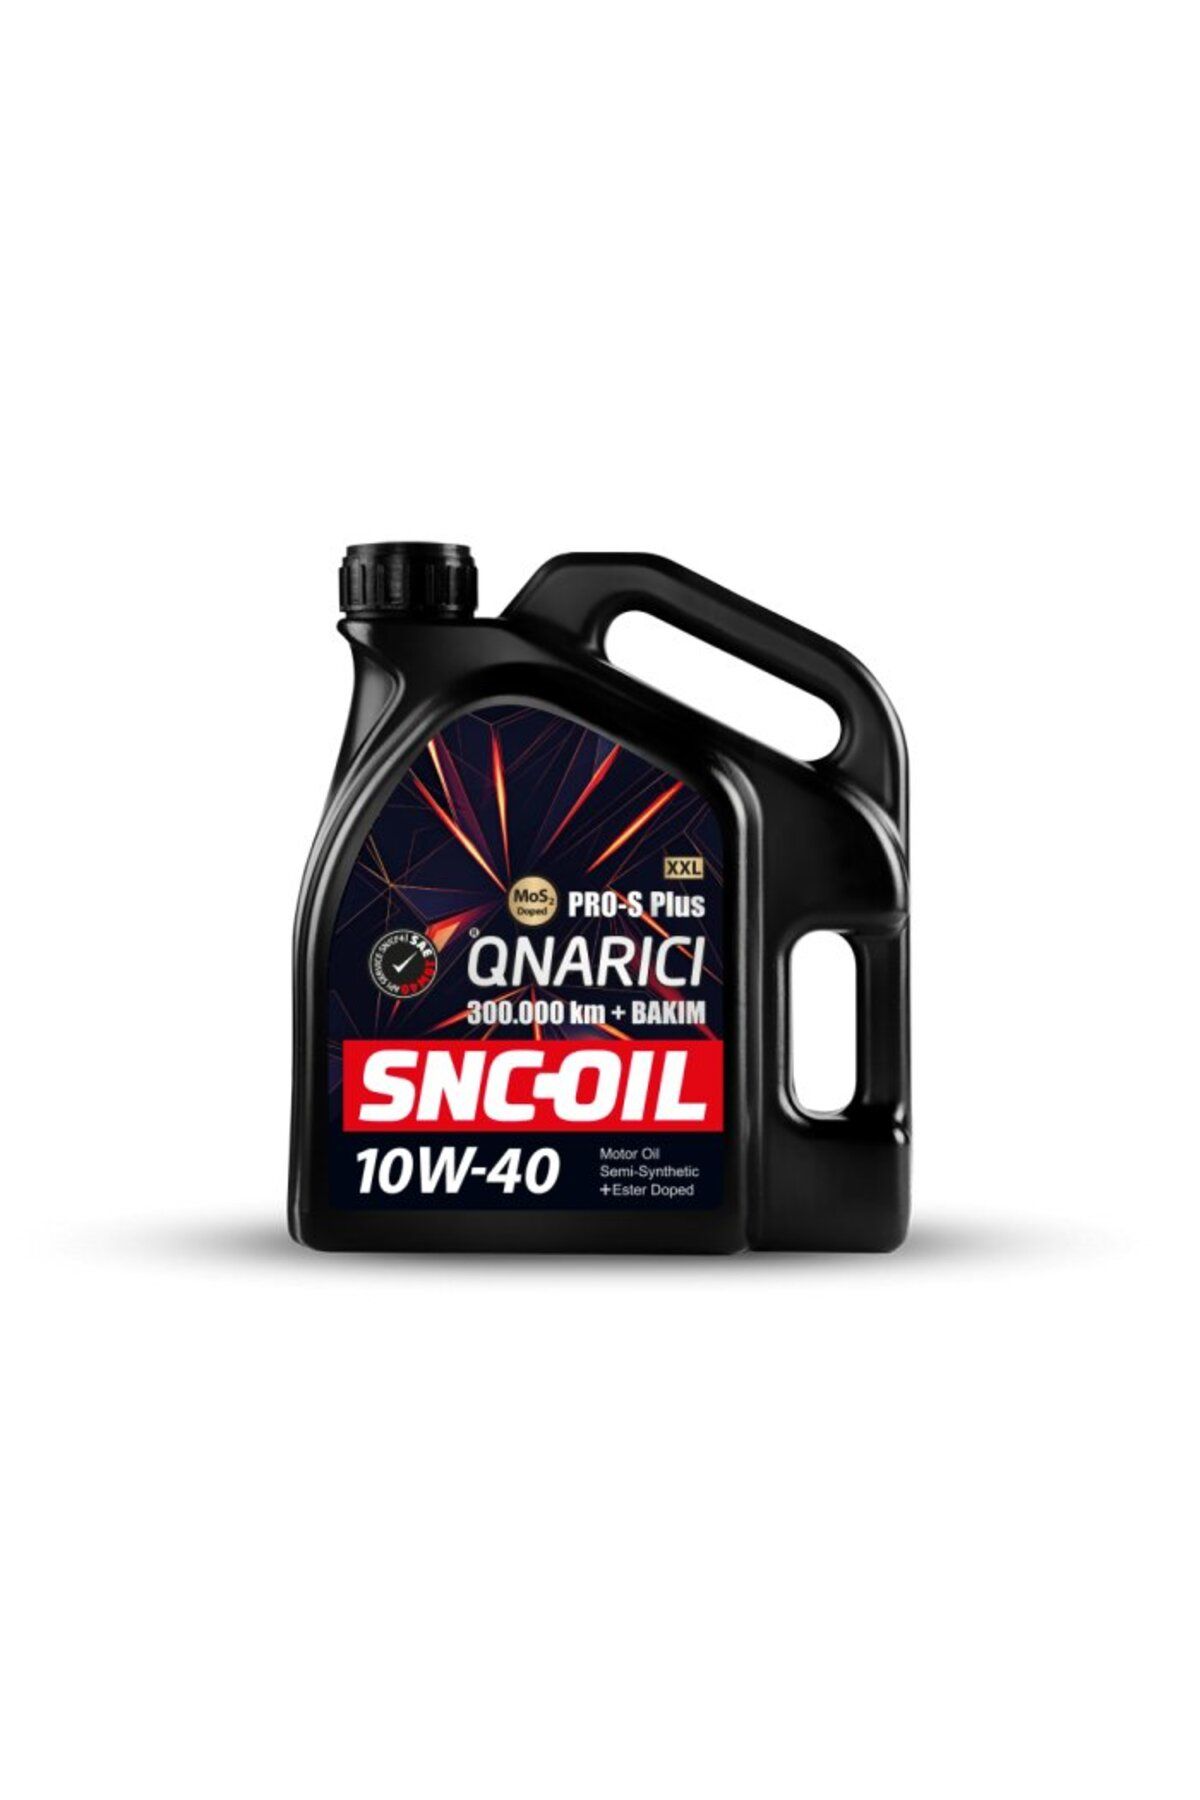 snc ICON GROUP - SNC-OIL 300.000 Km + Bakım Pro-S Plus XXL Onarıcı 10W-40 Motor Yağı (4 Litre)